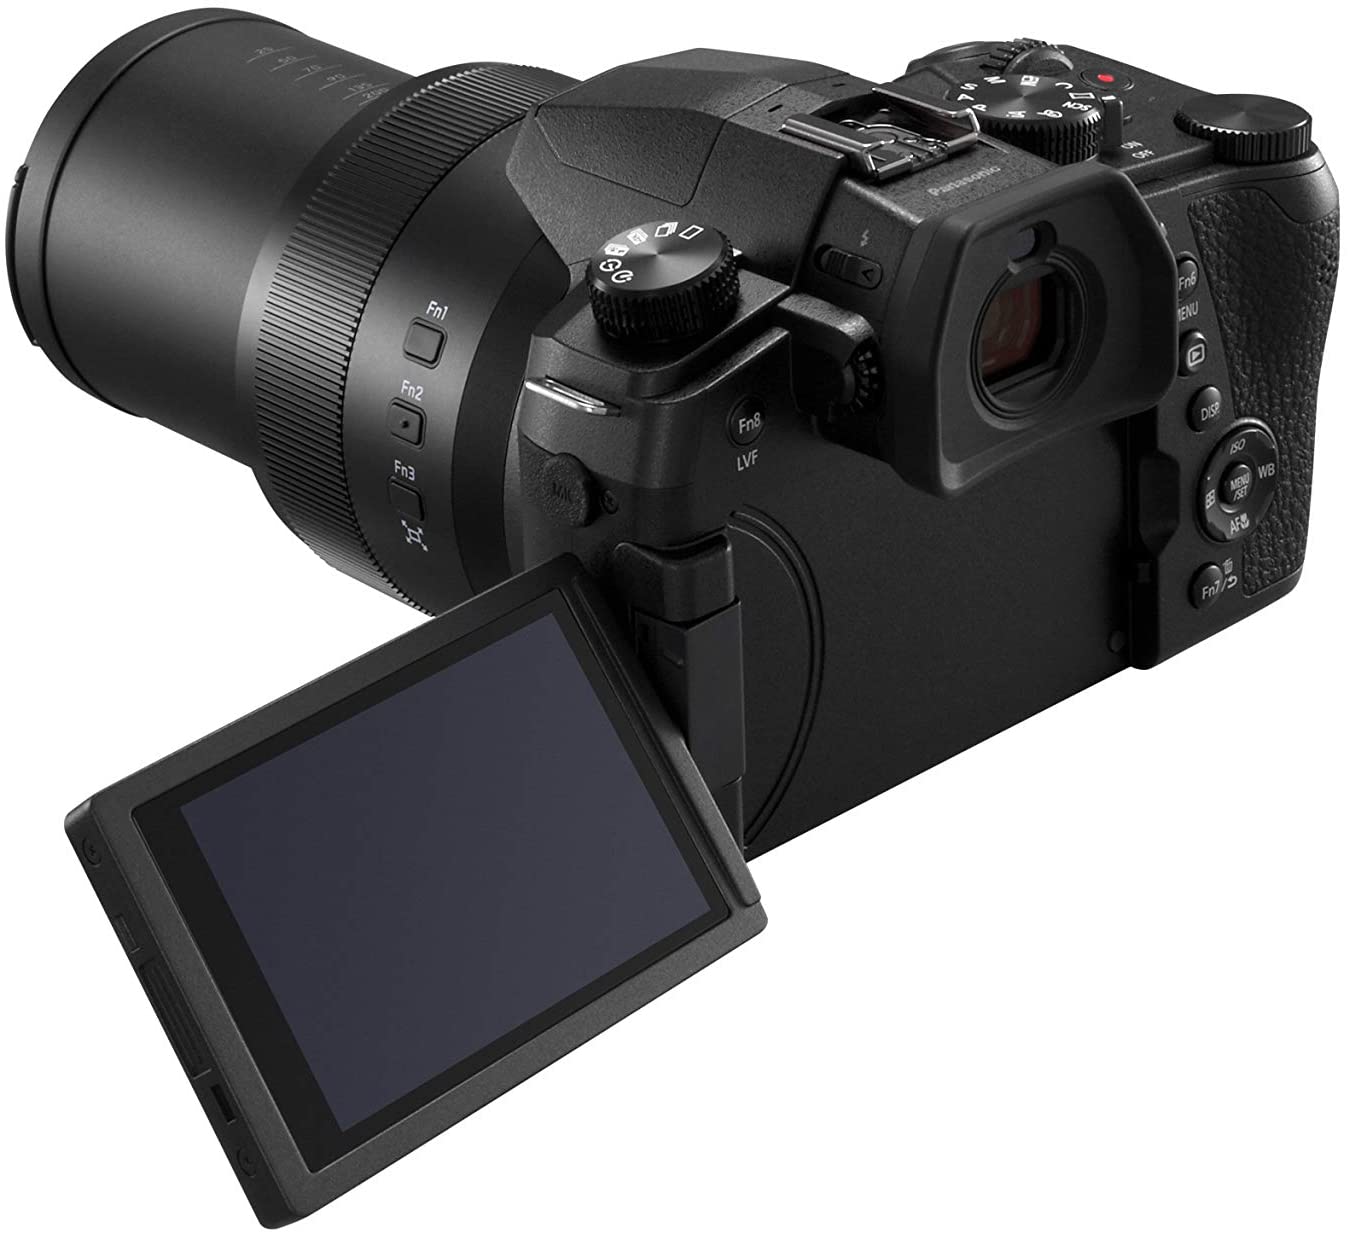 Panasonic Lumix DMC-FZ1000 II, Digital Compact Cameras Reviews and Comments